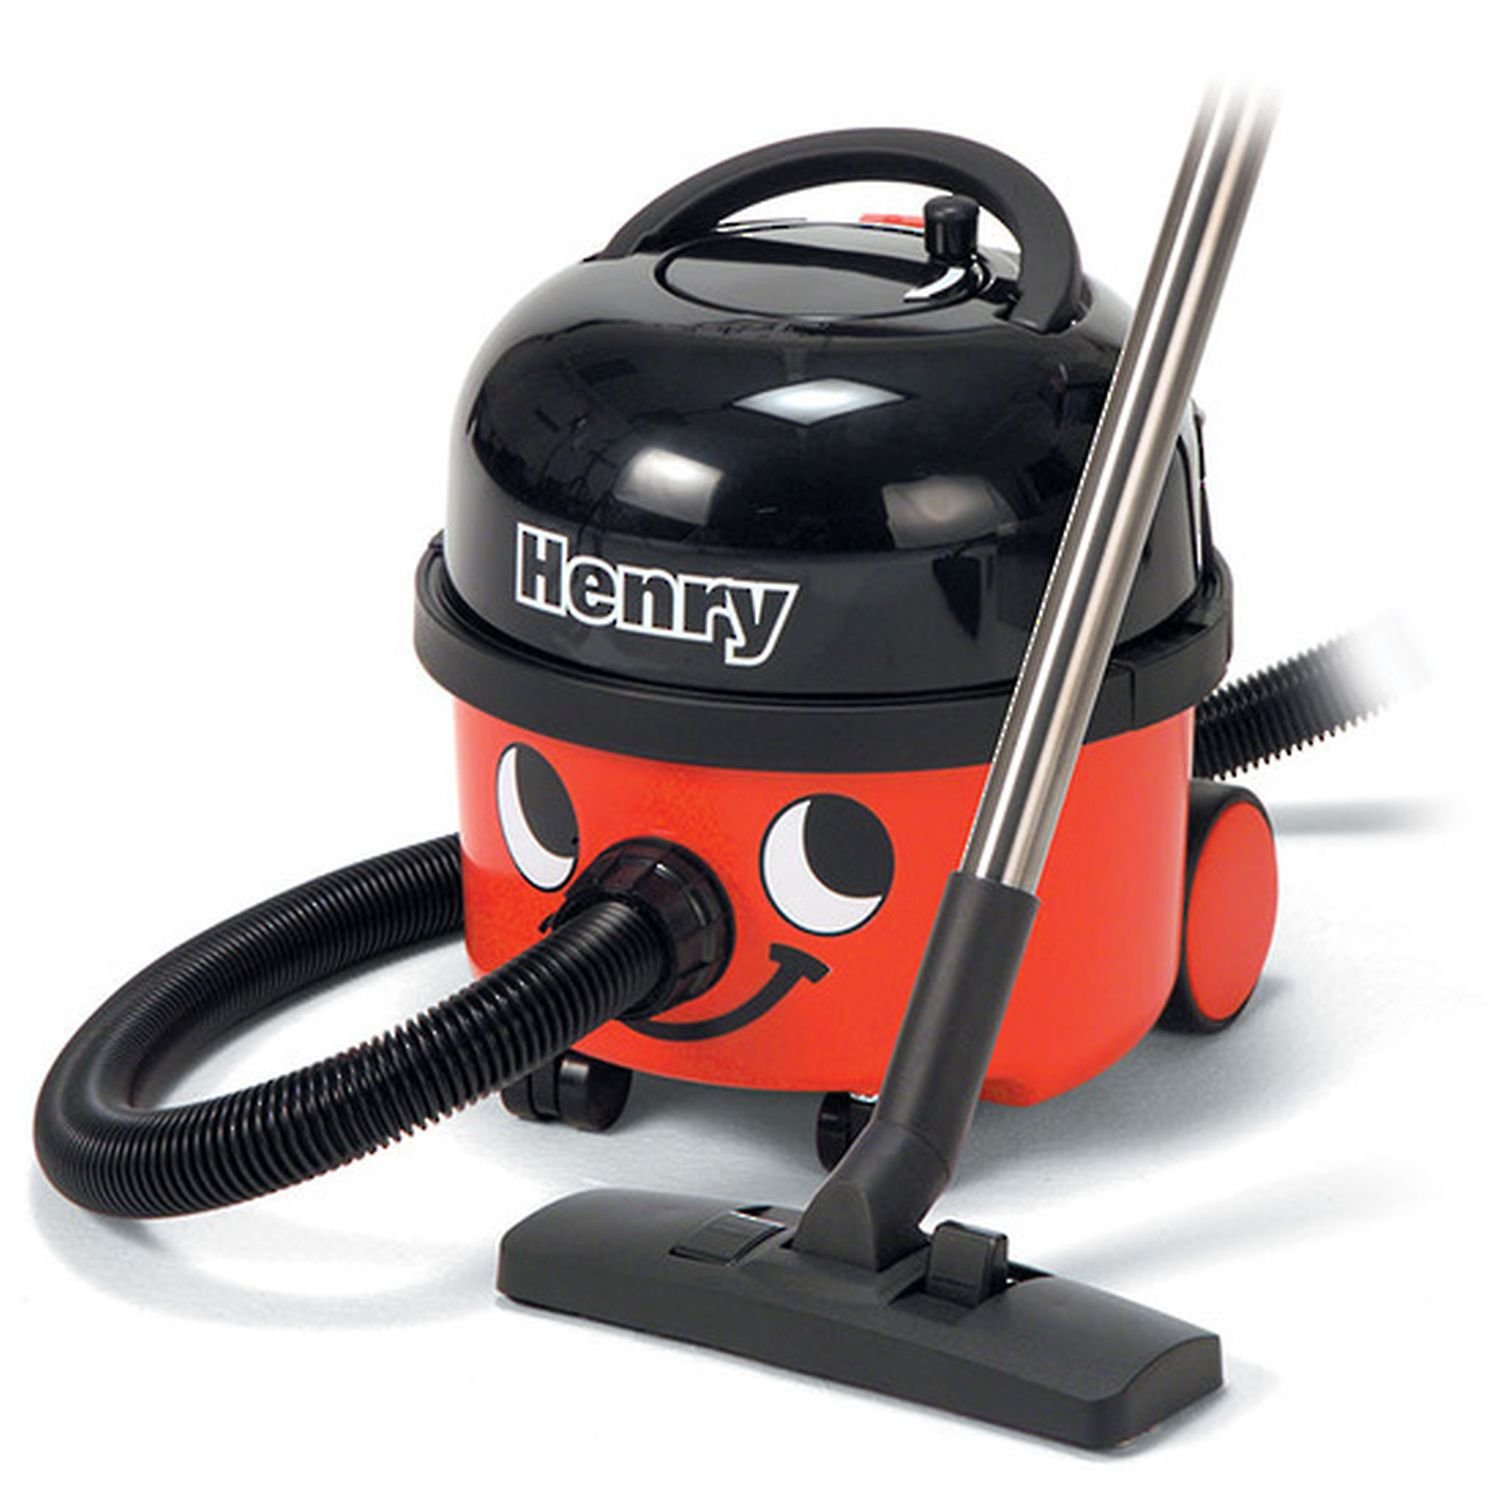 Henry Dry Vacuum Cleaner 9 Litre